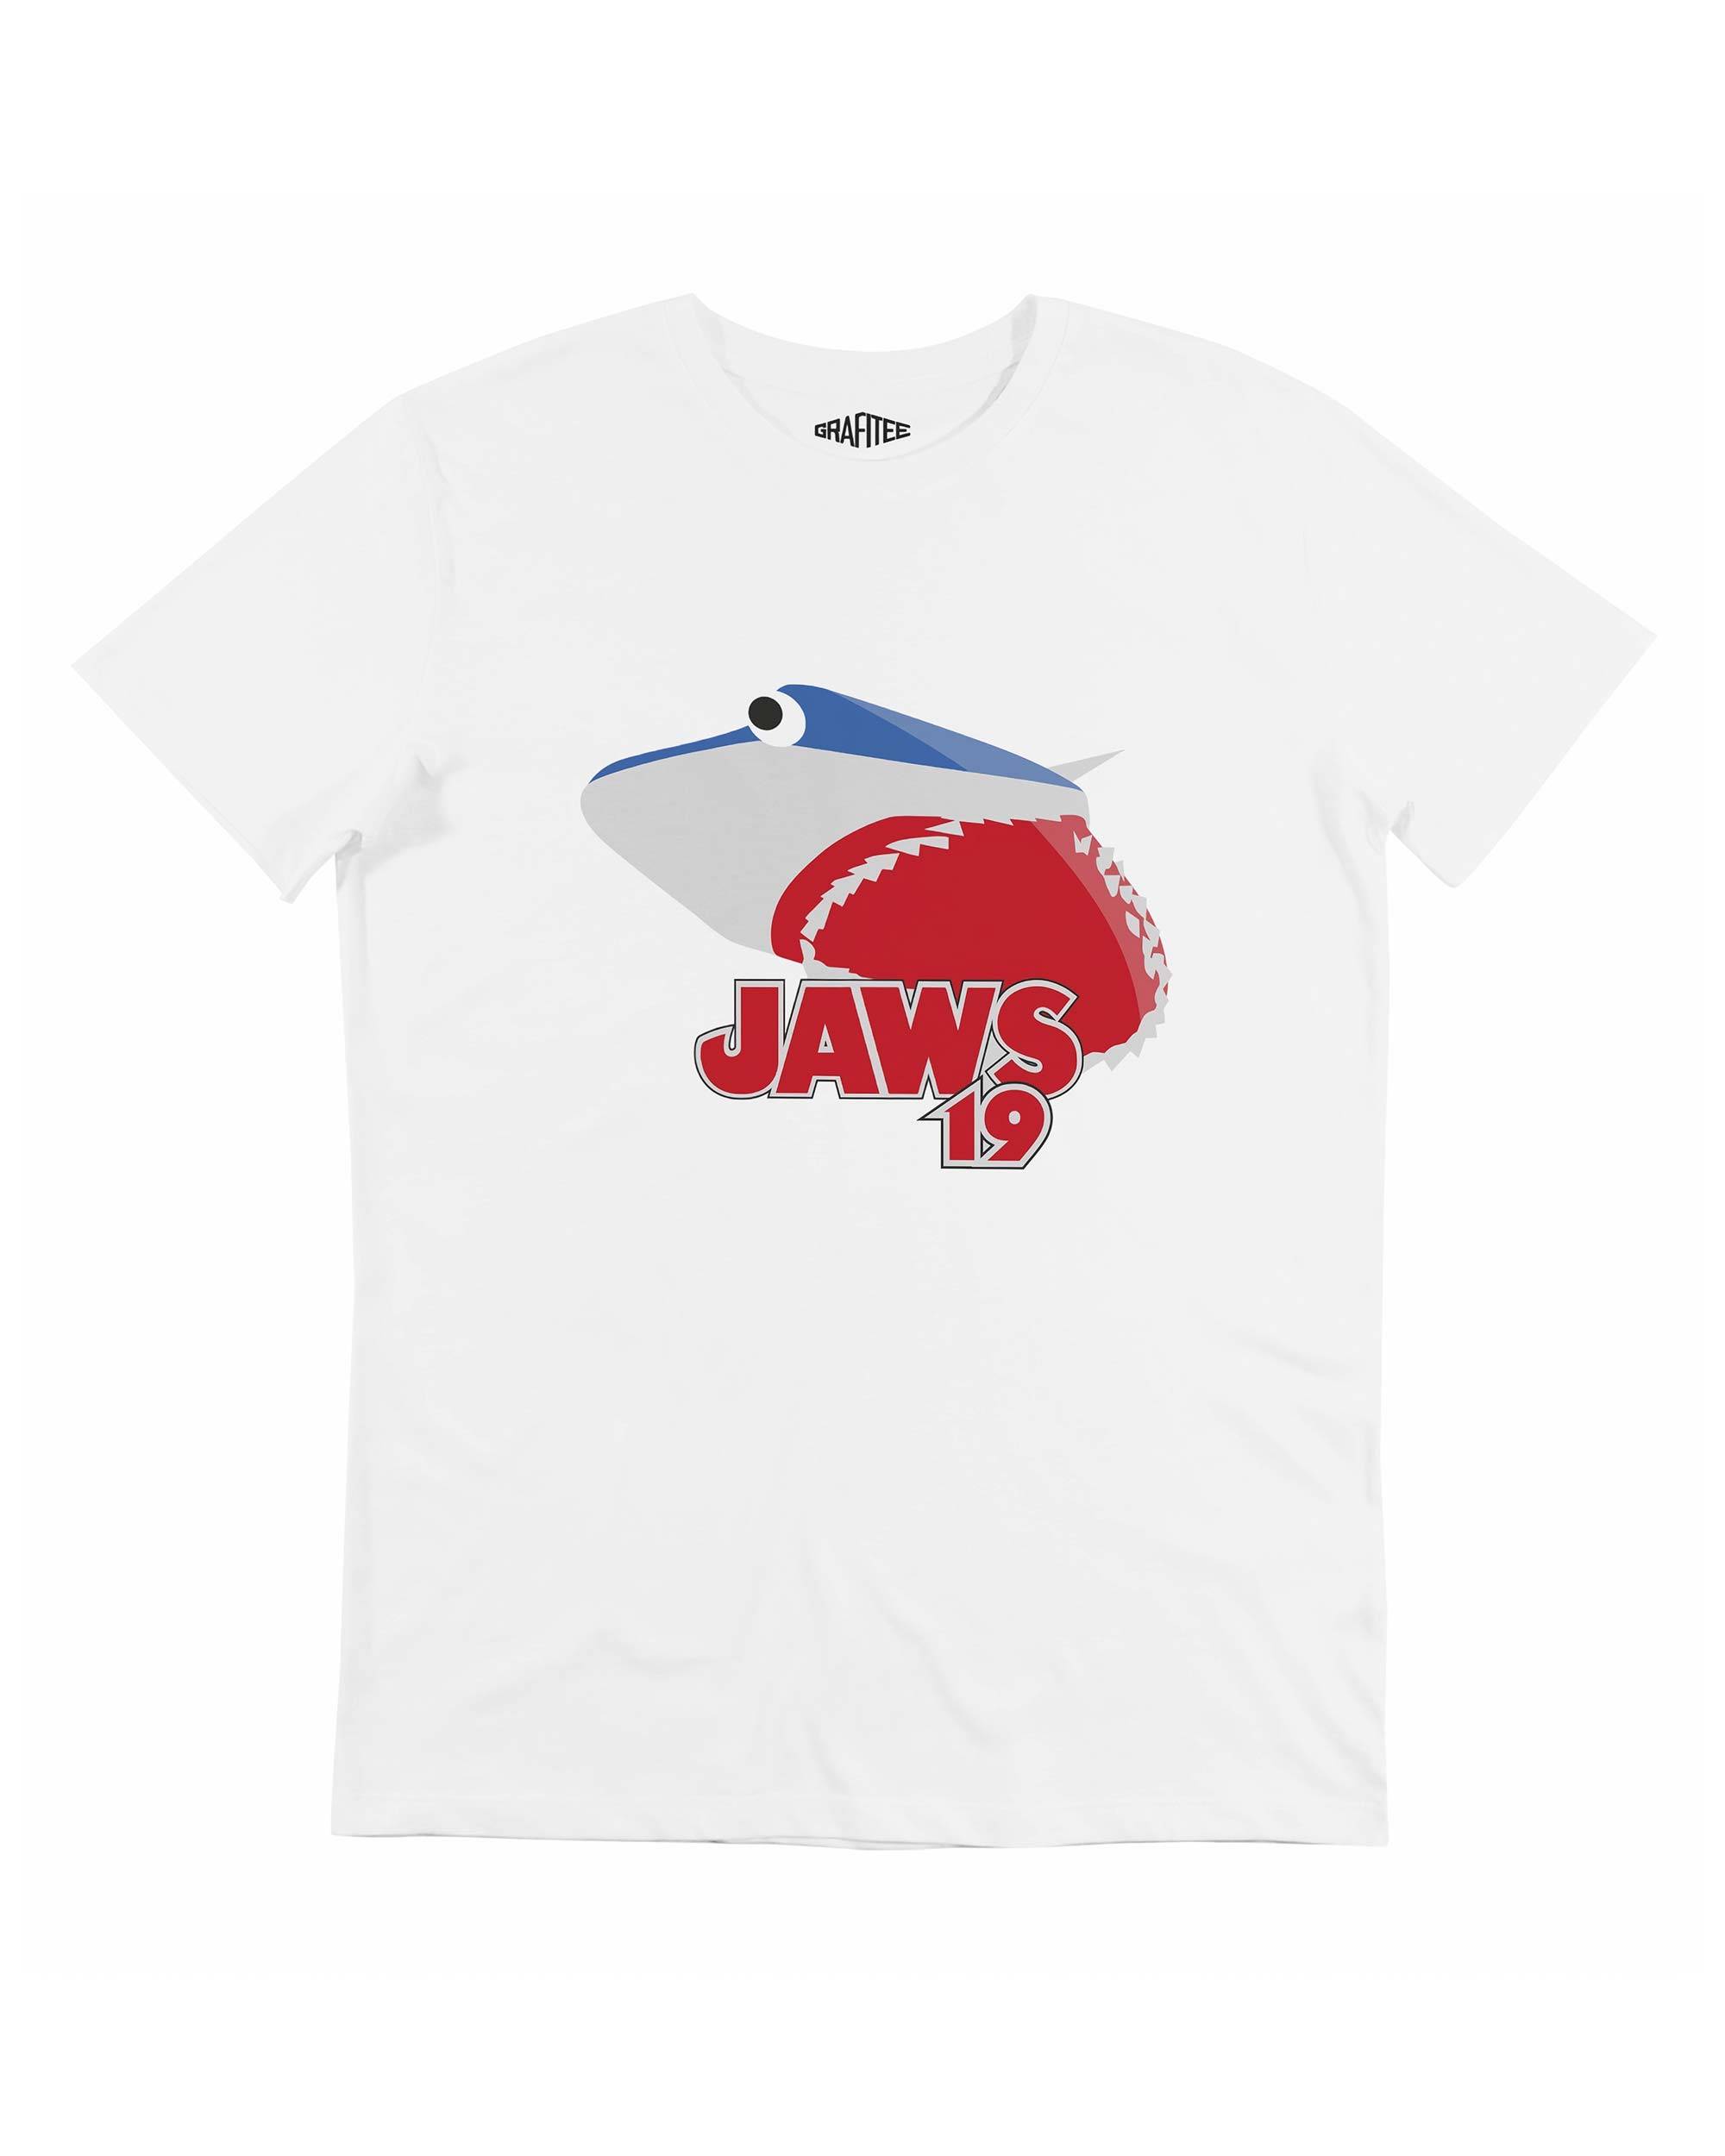 T-shirt Jaws 19 Grafitee